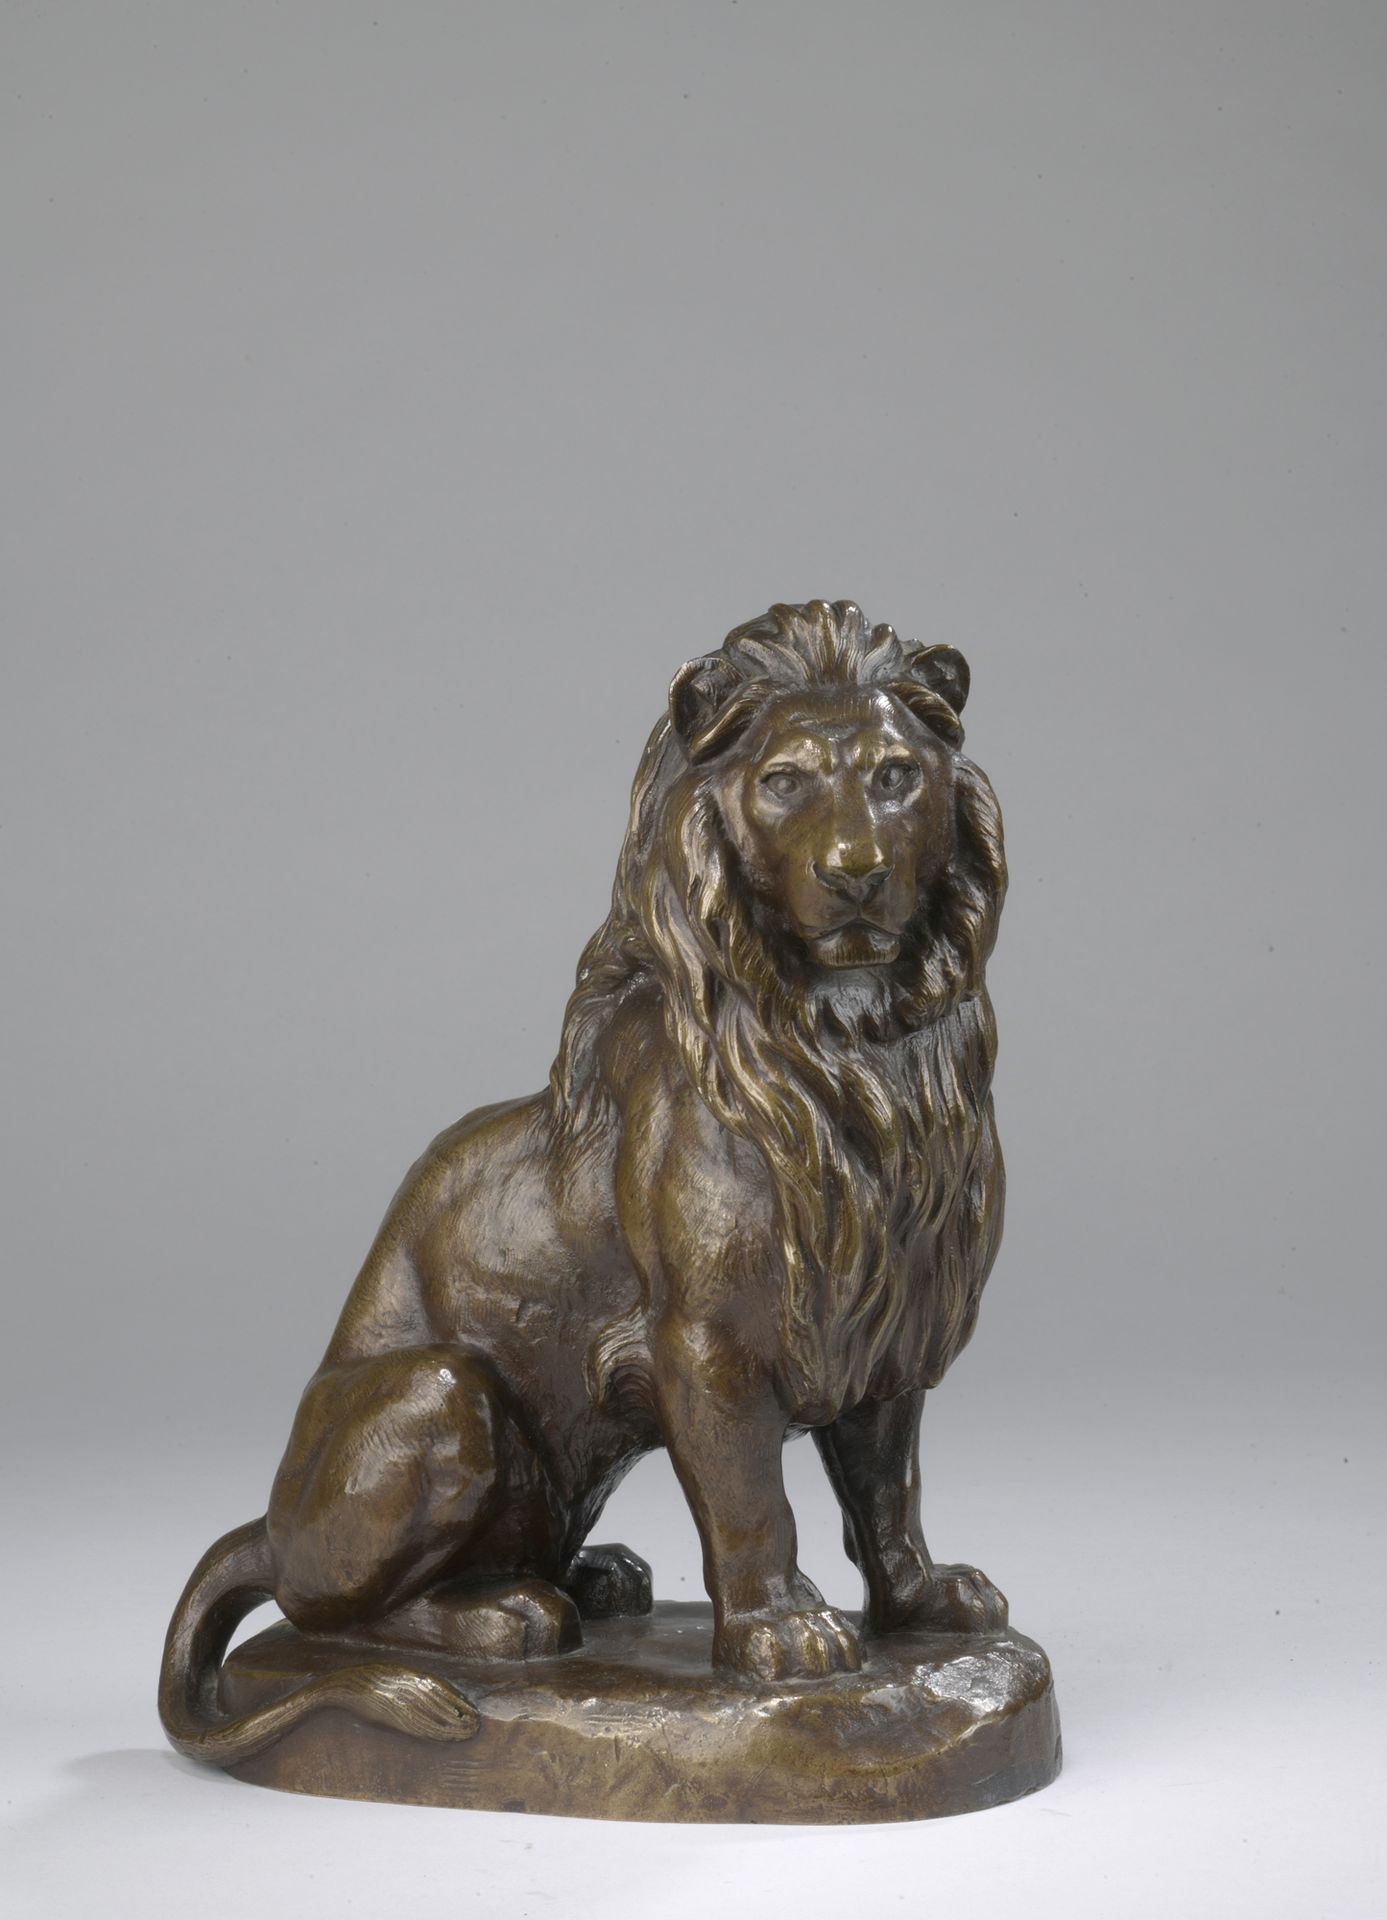 Null 皮埃尔-路易-鲁瓦勒 (1820-1881)

坐着的狮子

青铜，带有浅棕色的铜锈。

签名：P. Rouillard在露台上。

印有创始人GRU&hellip;